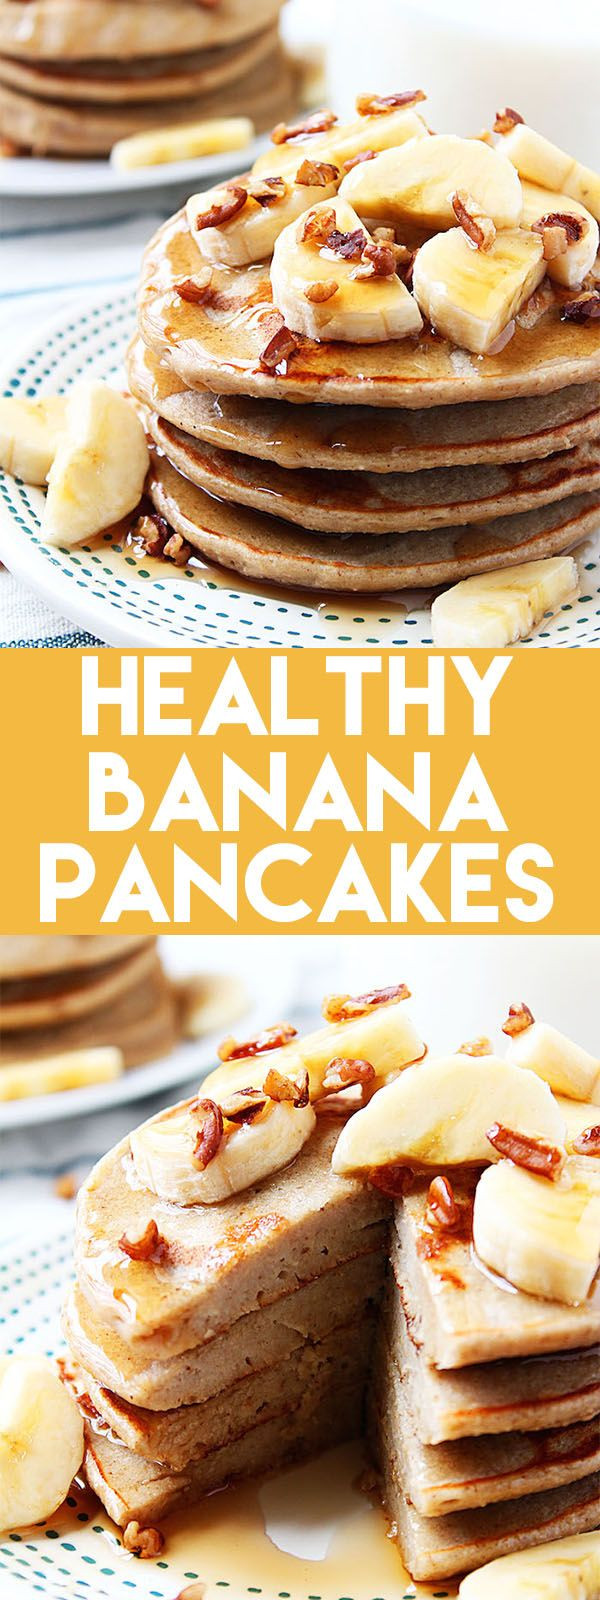 Healthy Banana Recipes Low Calories Diet
 Skinny Banana Pancakes Recipe